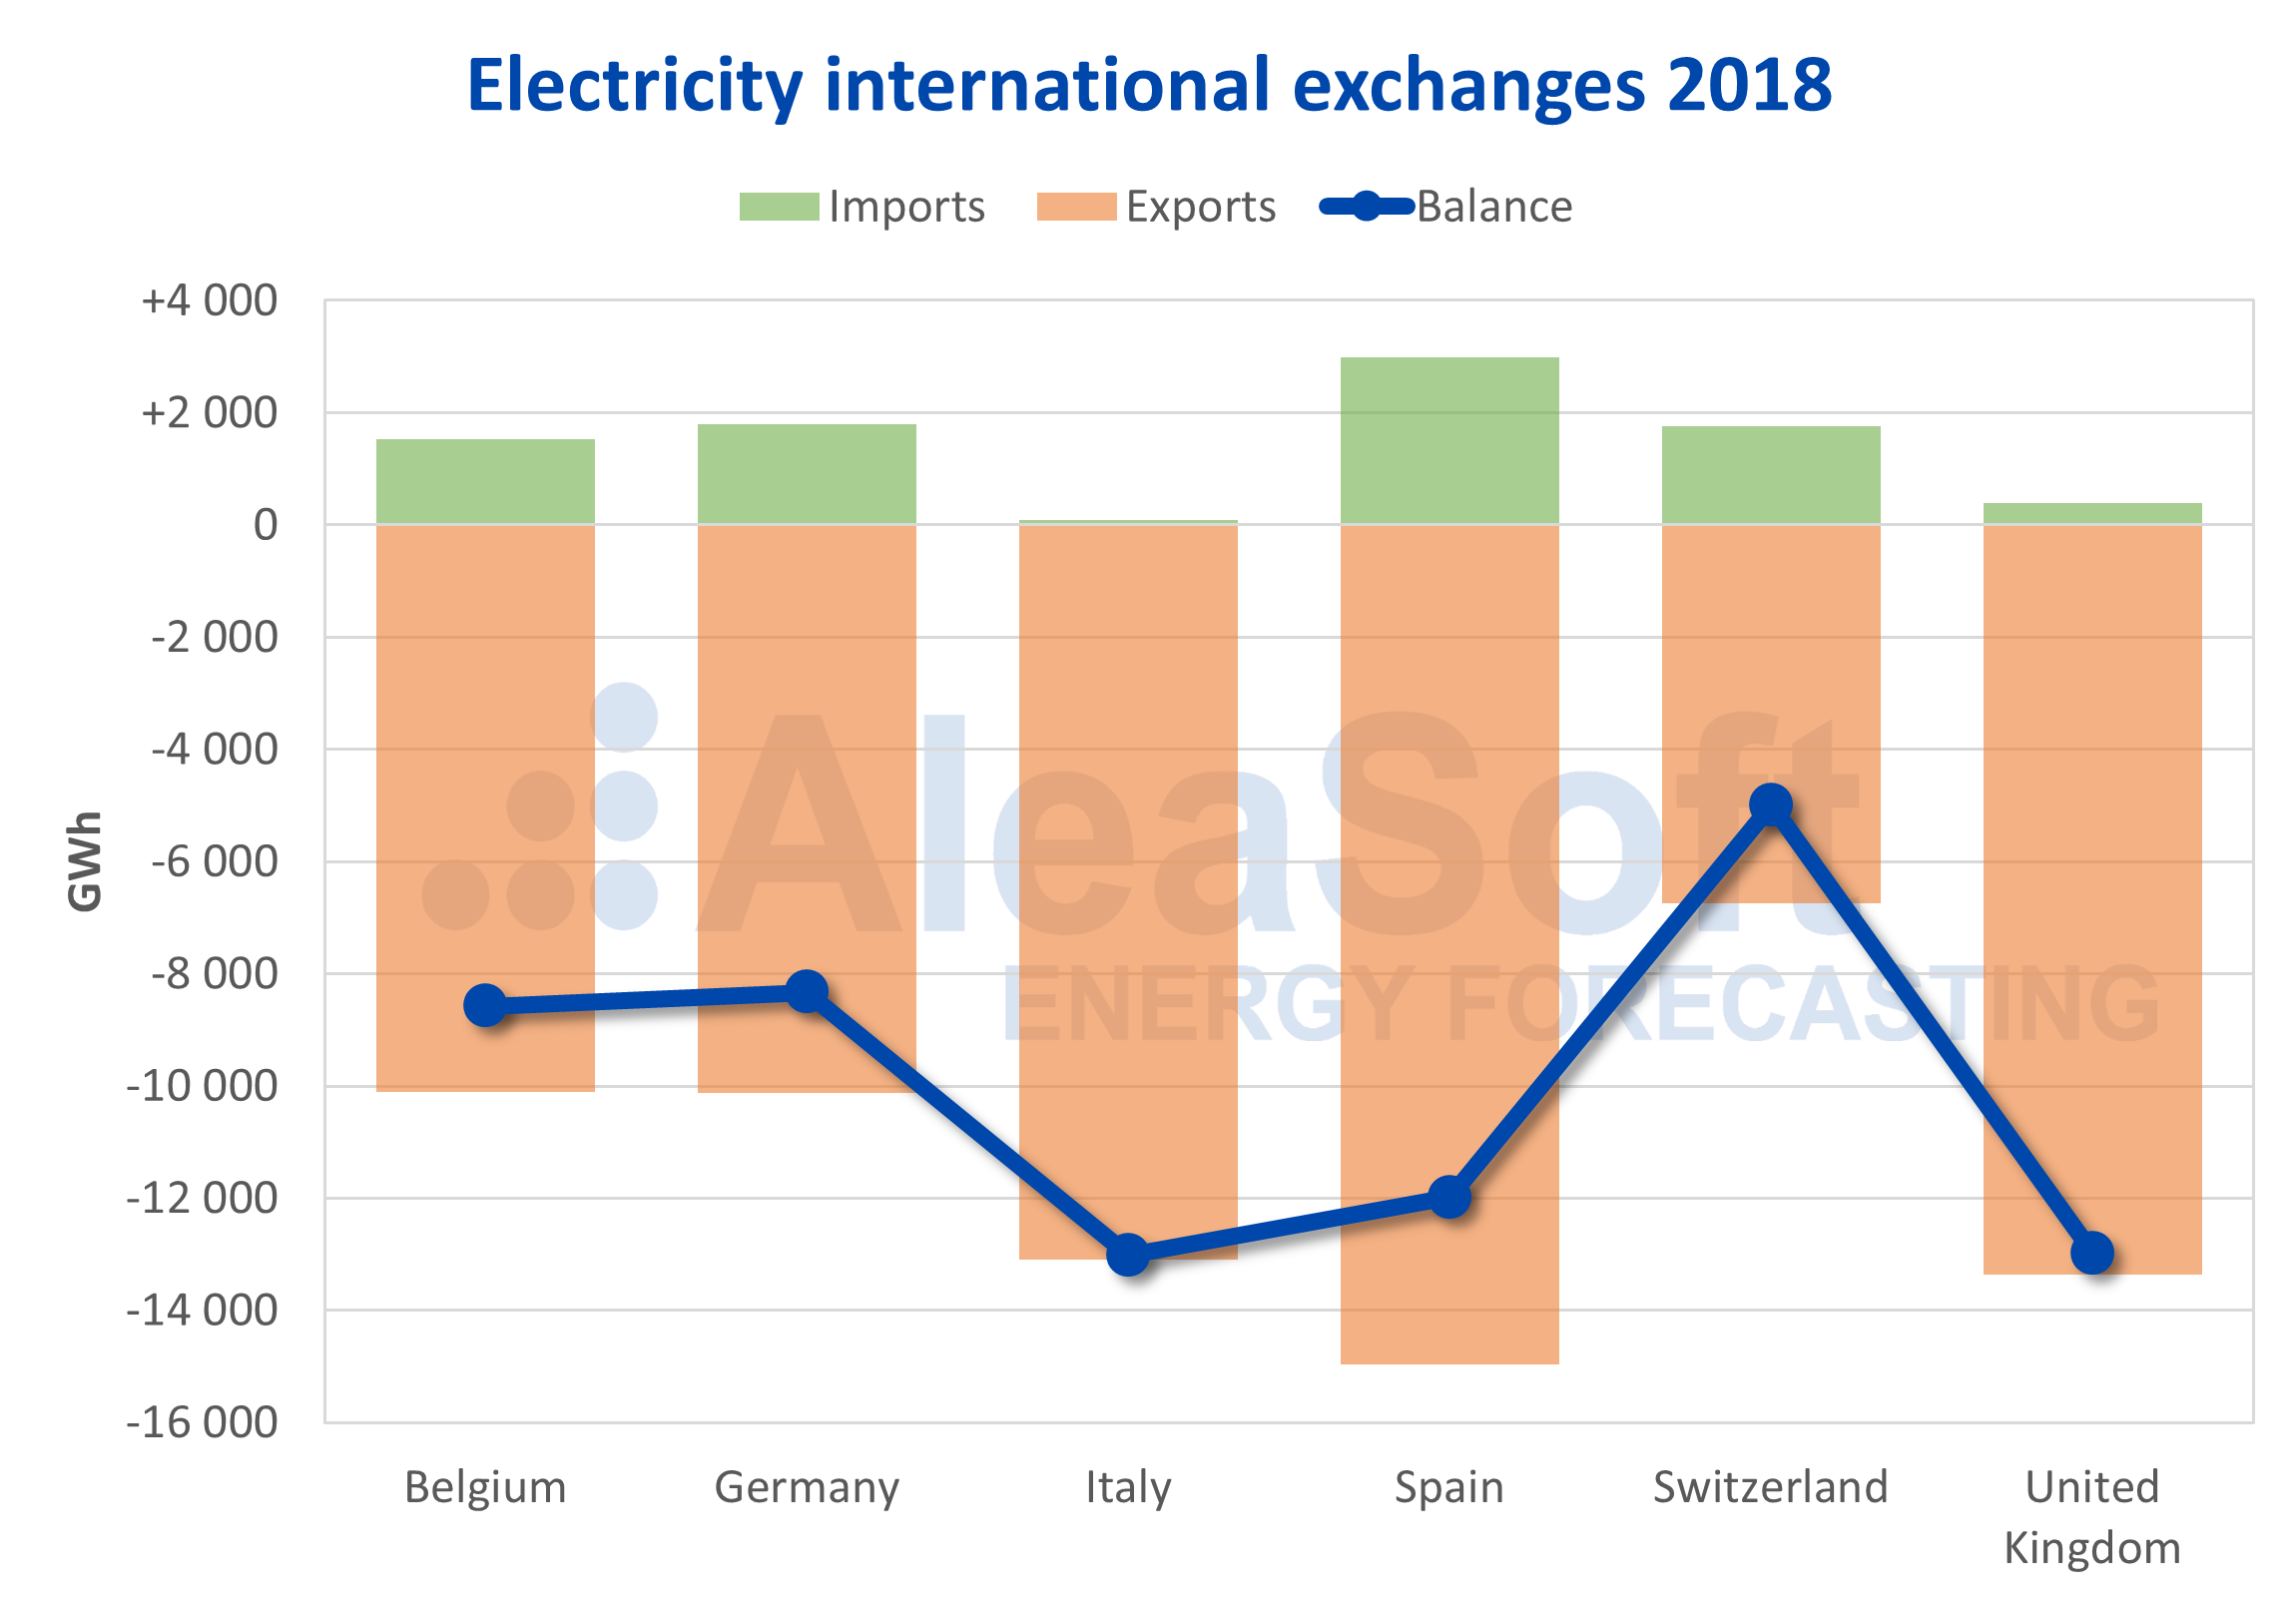 AleaSoft - France international electricity exchanges 2018